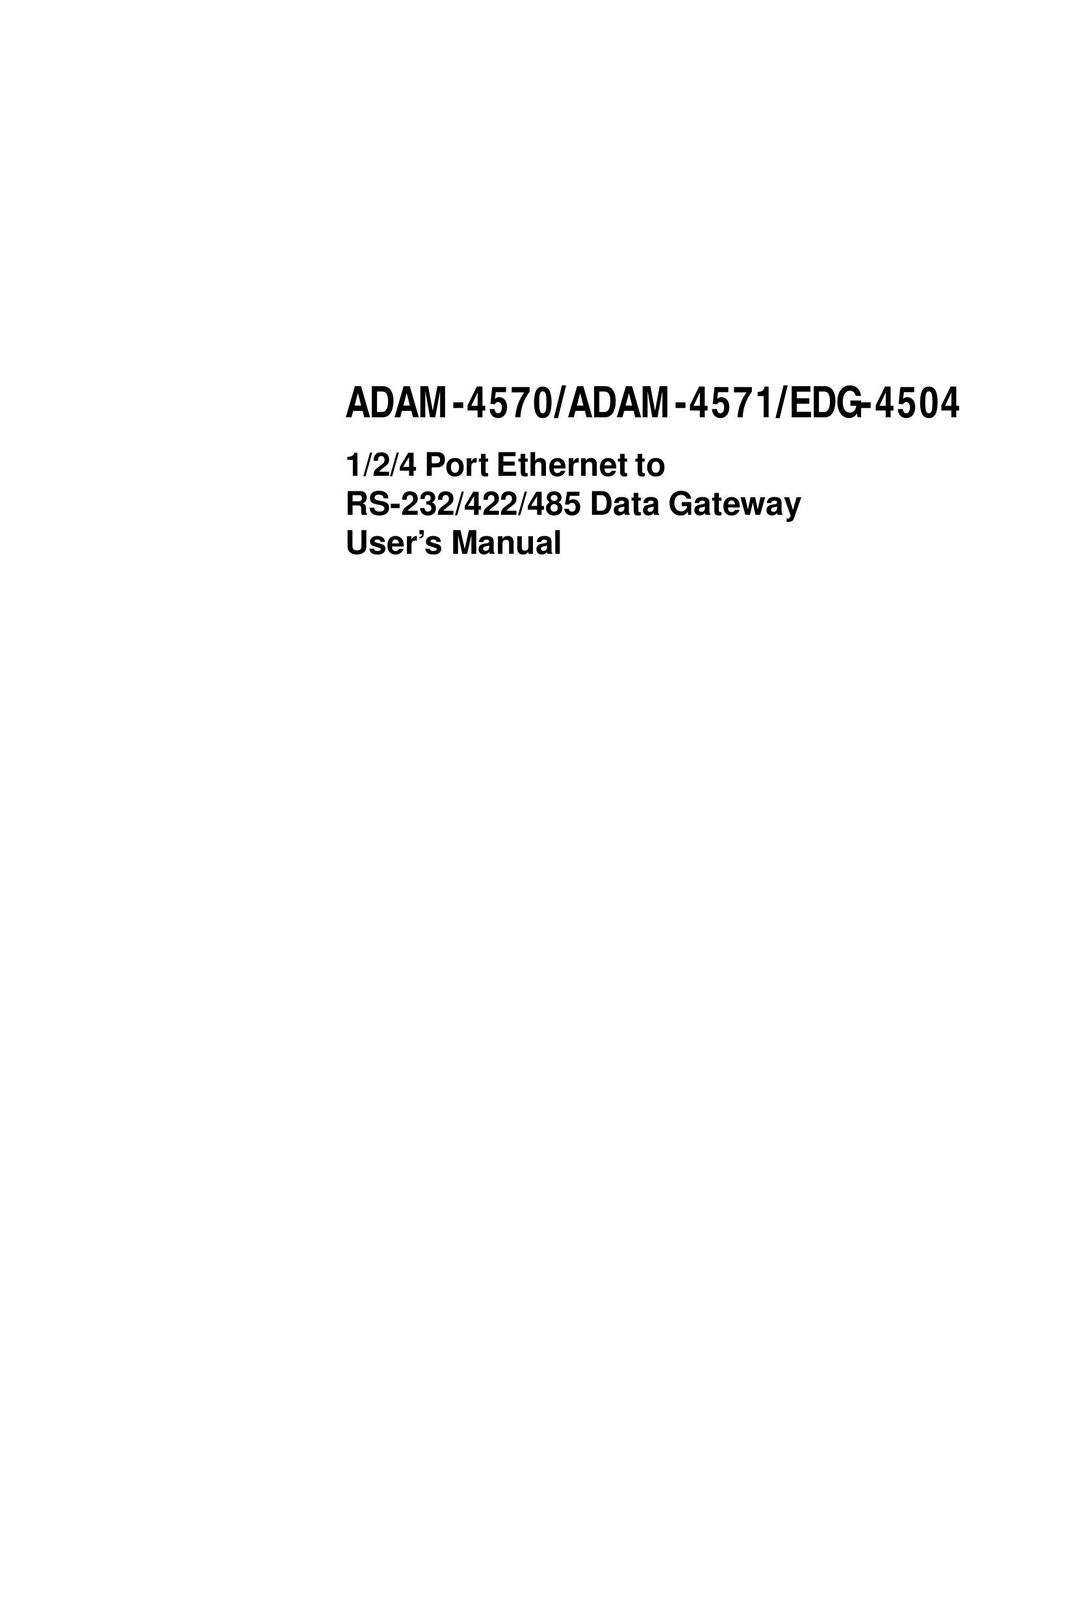 Advantech EDG-4504 Switch User Manual